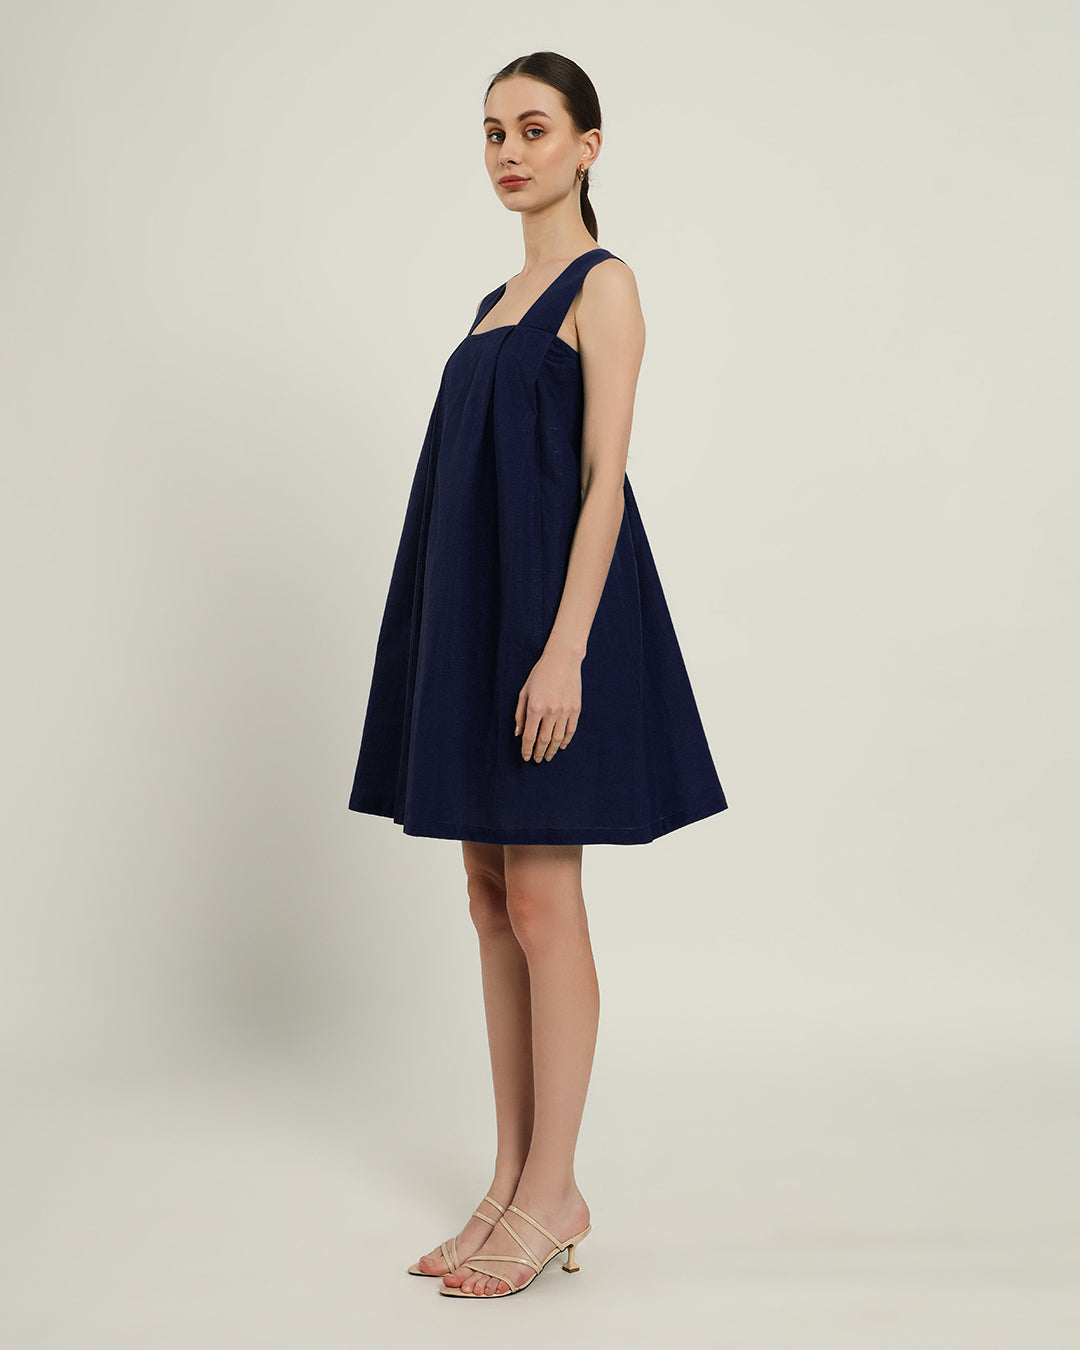 The Larissa Daisy Midnight Blue Linen Dress